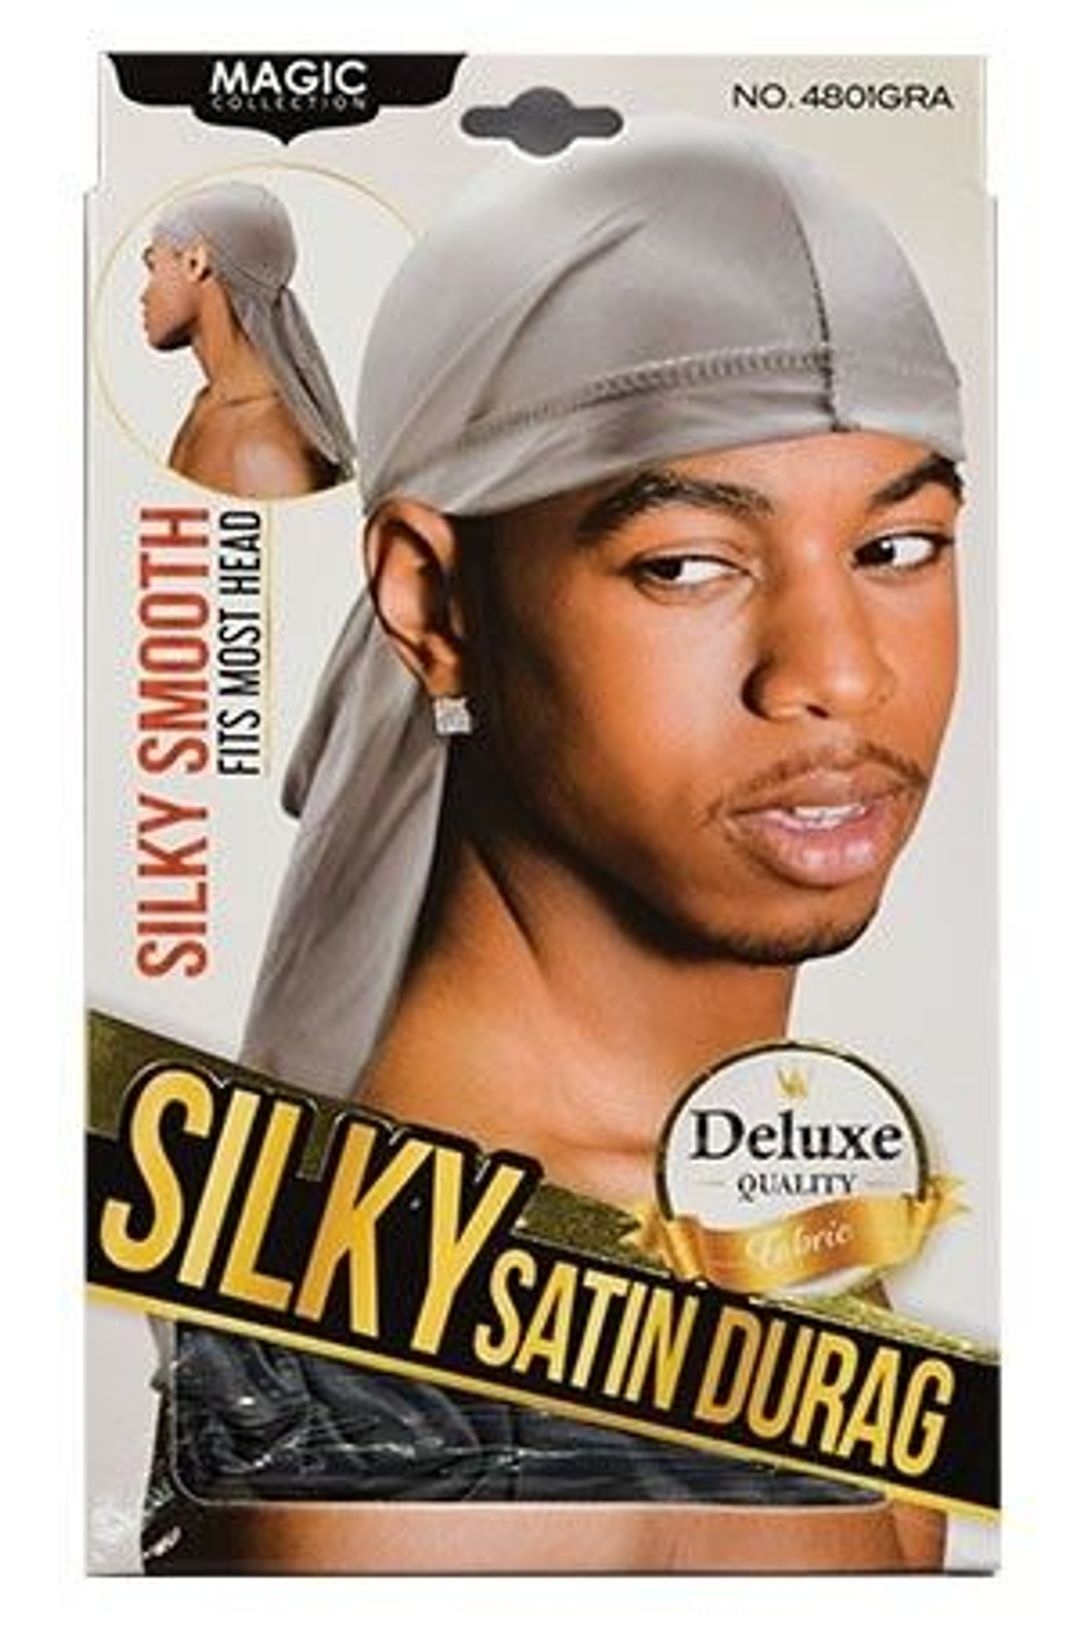 Magic Men's Silky Satin Durag Grey - 4801grey